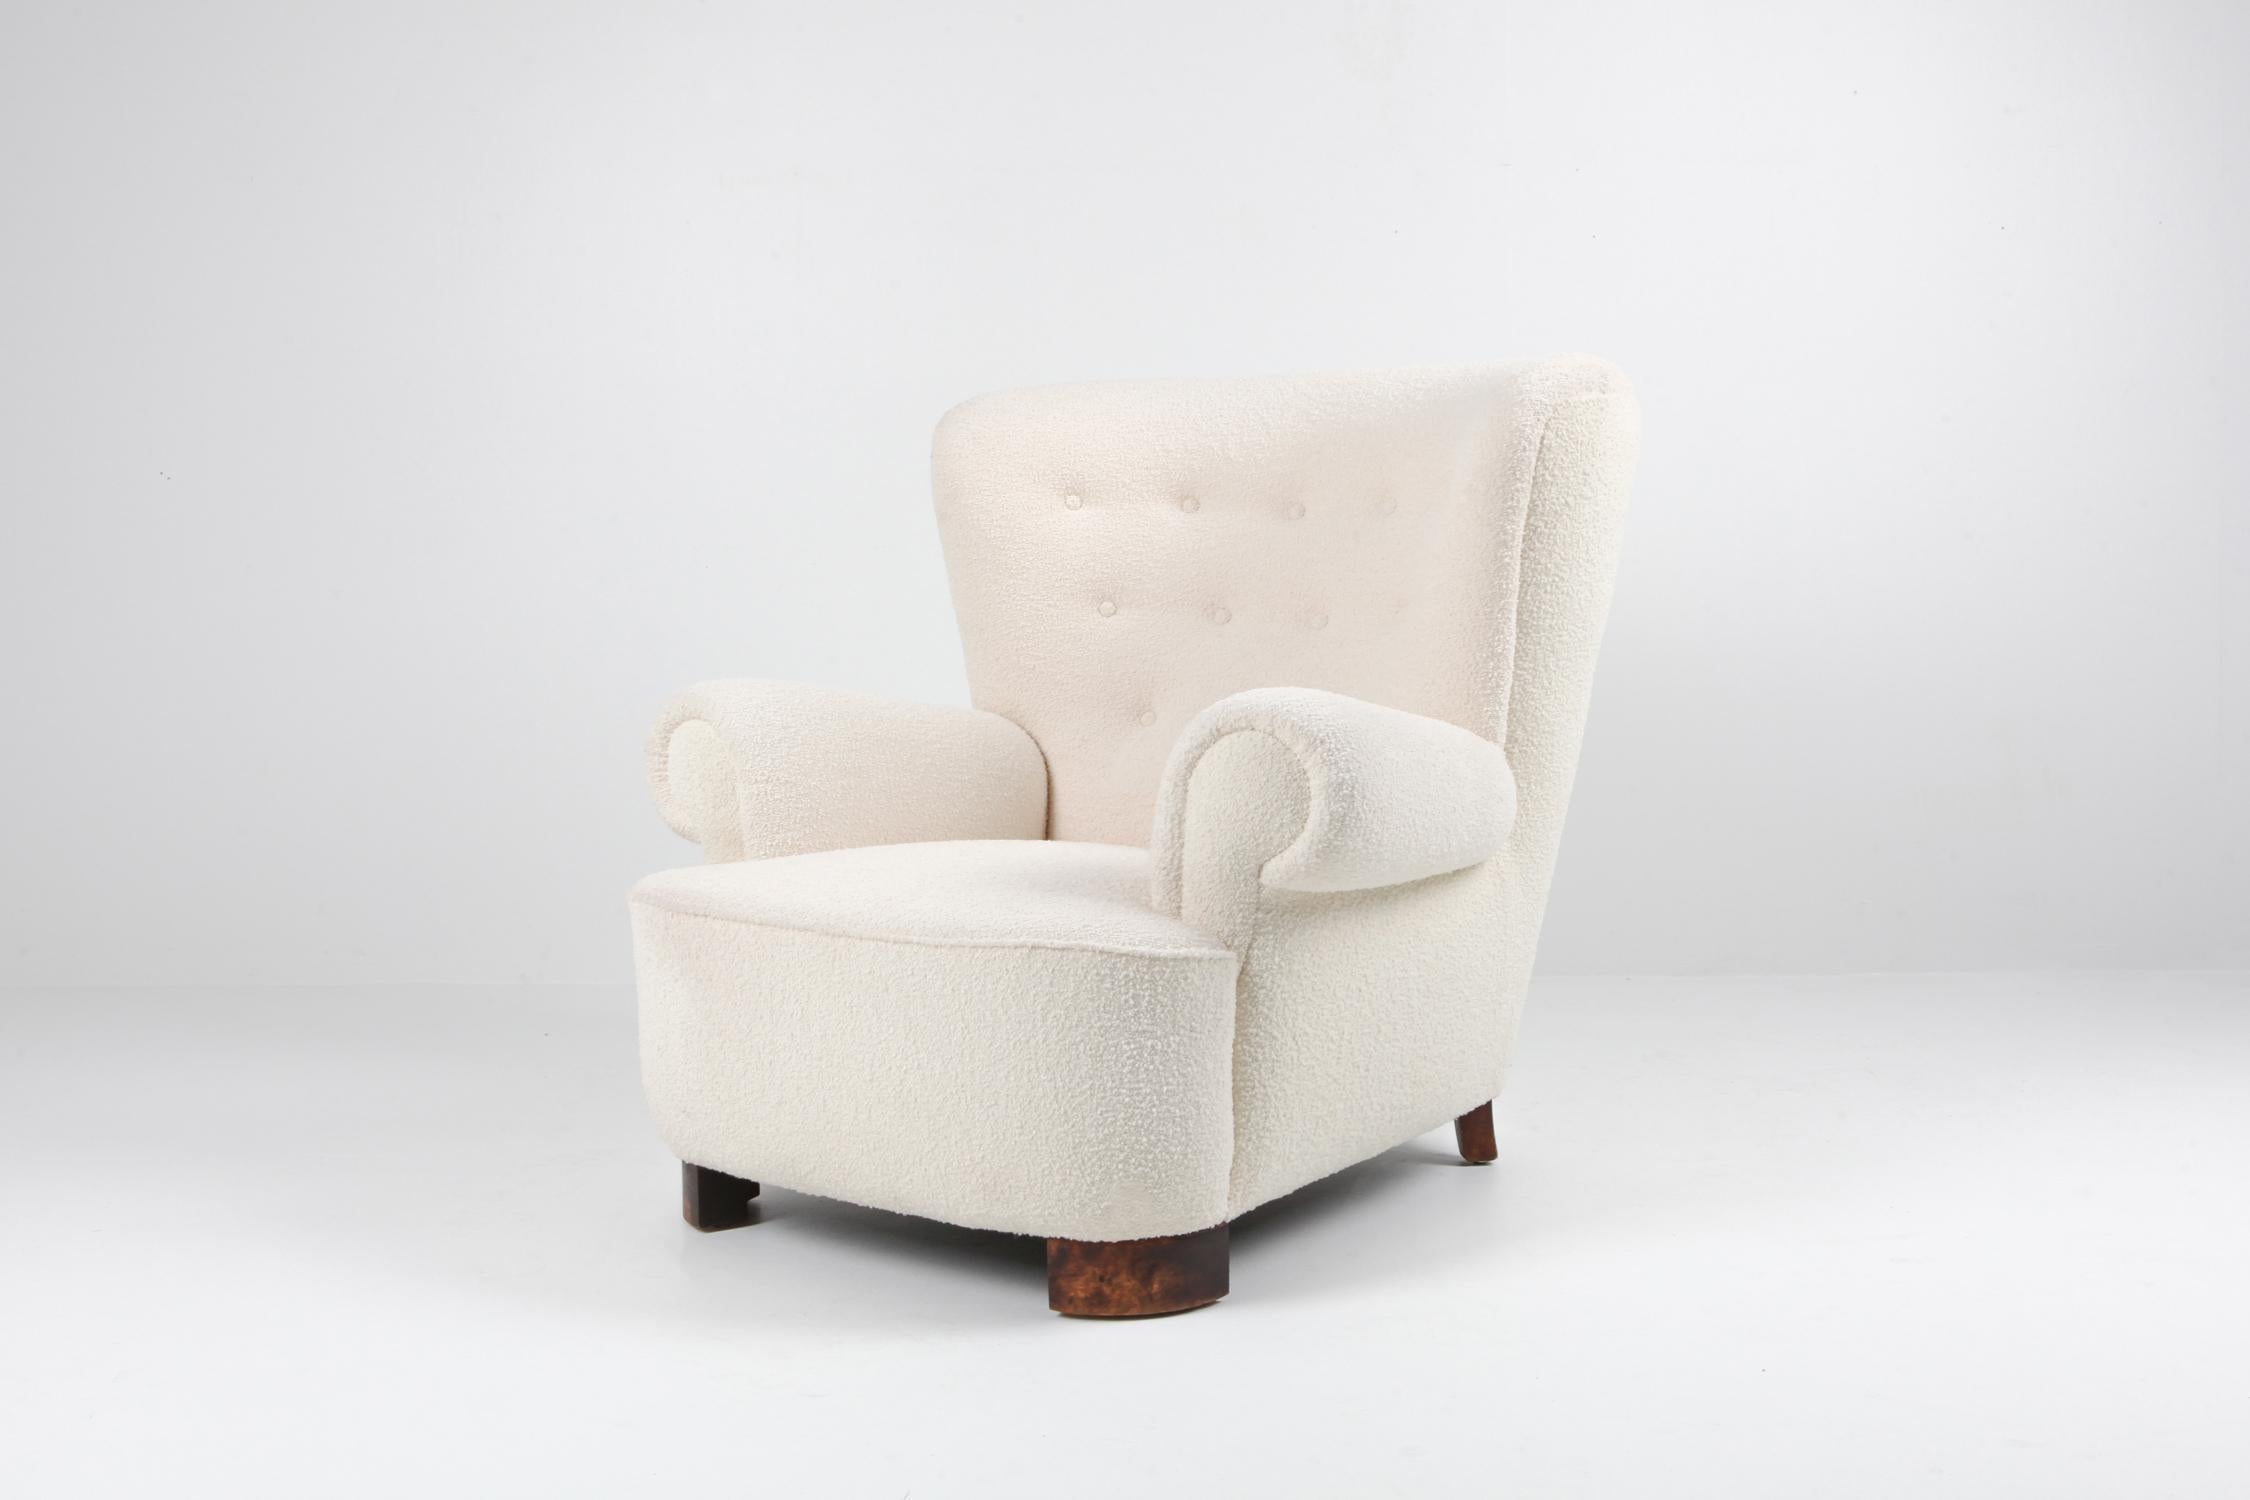 Flemming Lassen Style Sessel aus Bouclé-Wolle, skandinavisches Design, 1960er Jahre (Skandinavische Moderne) im Angebot